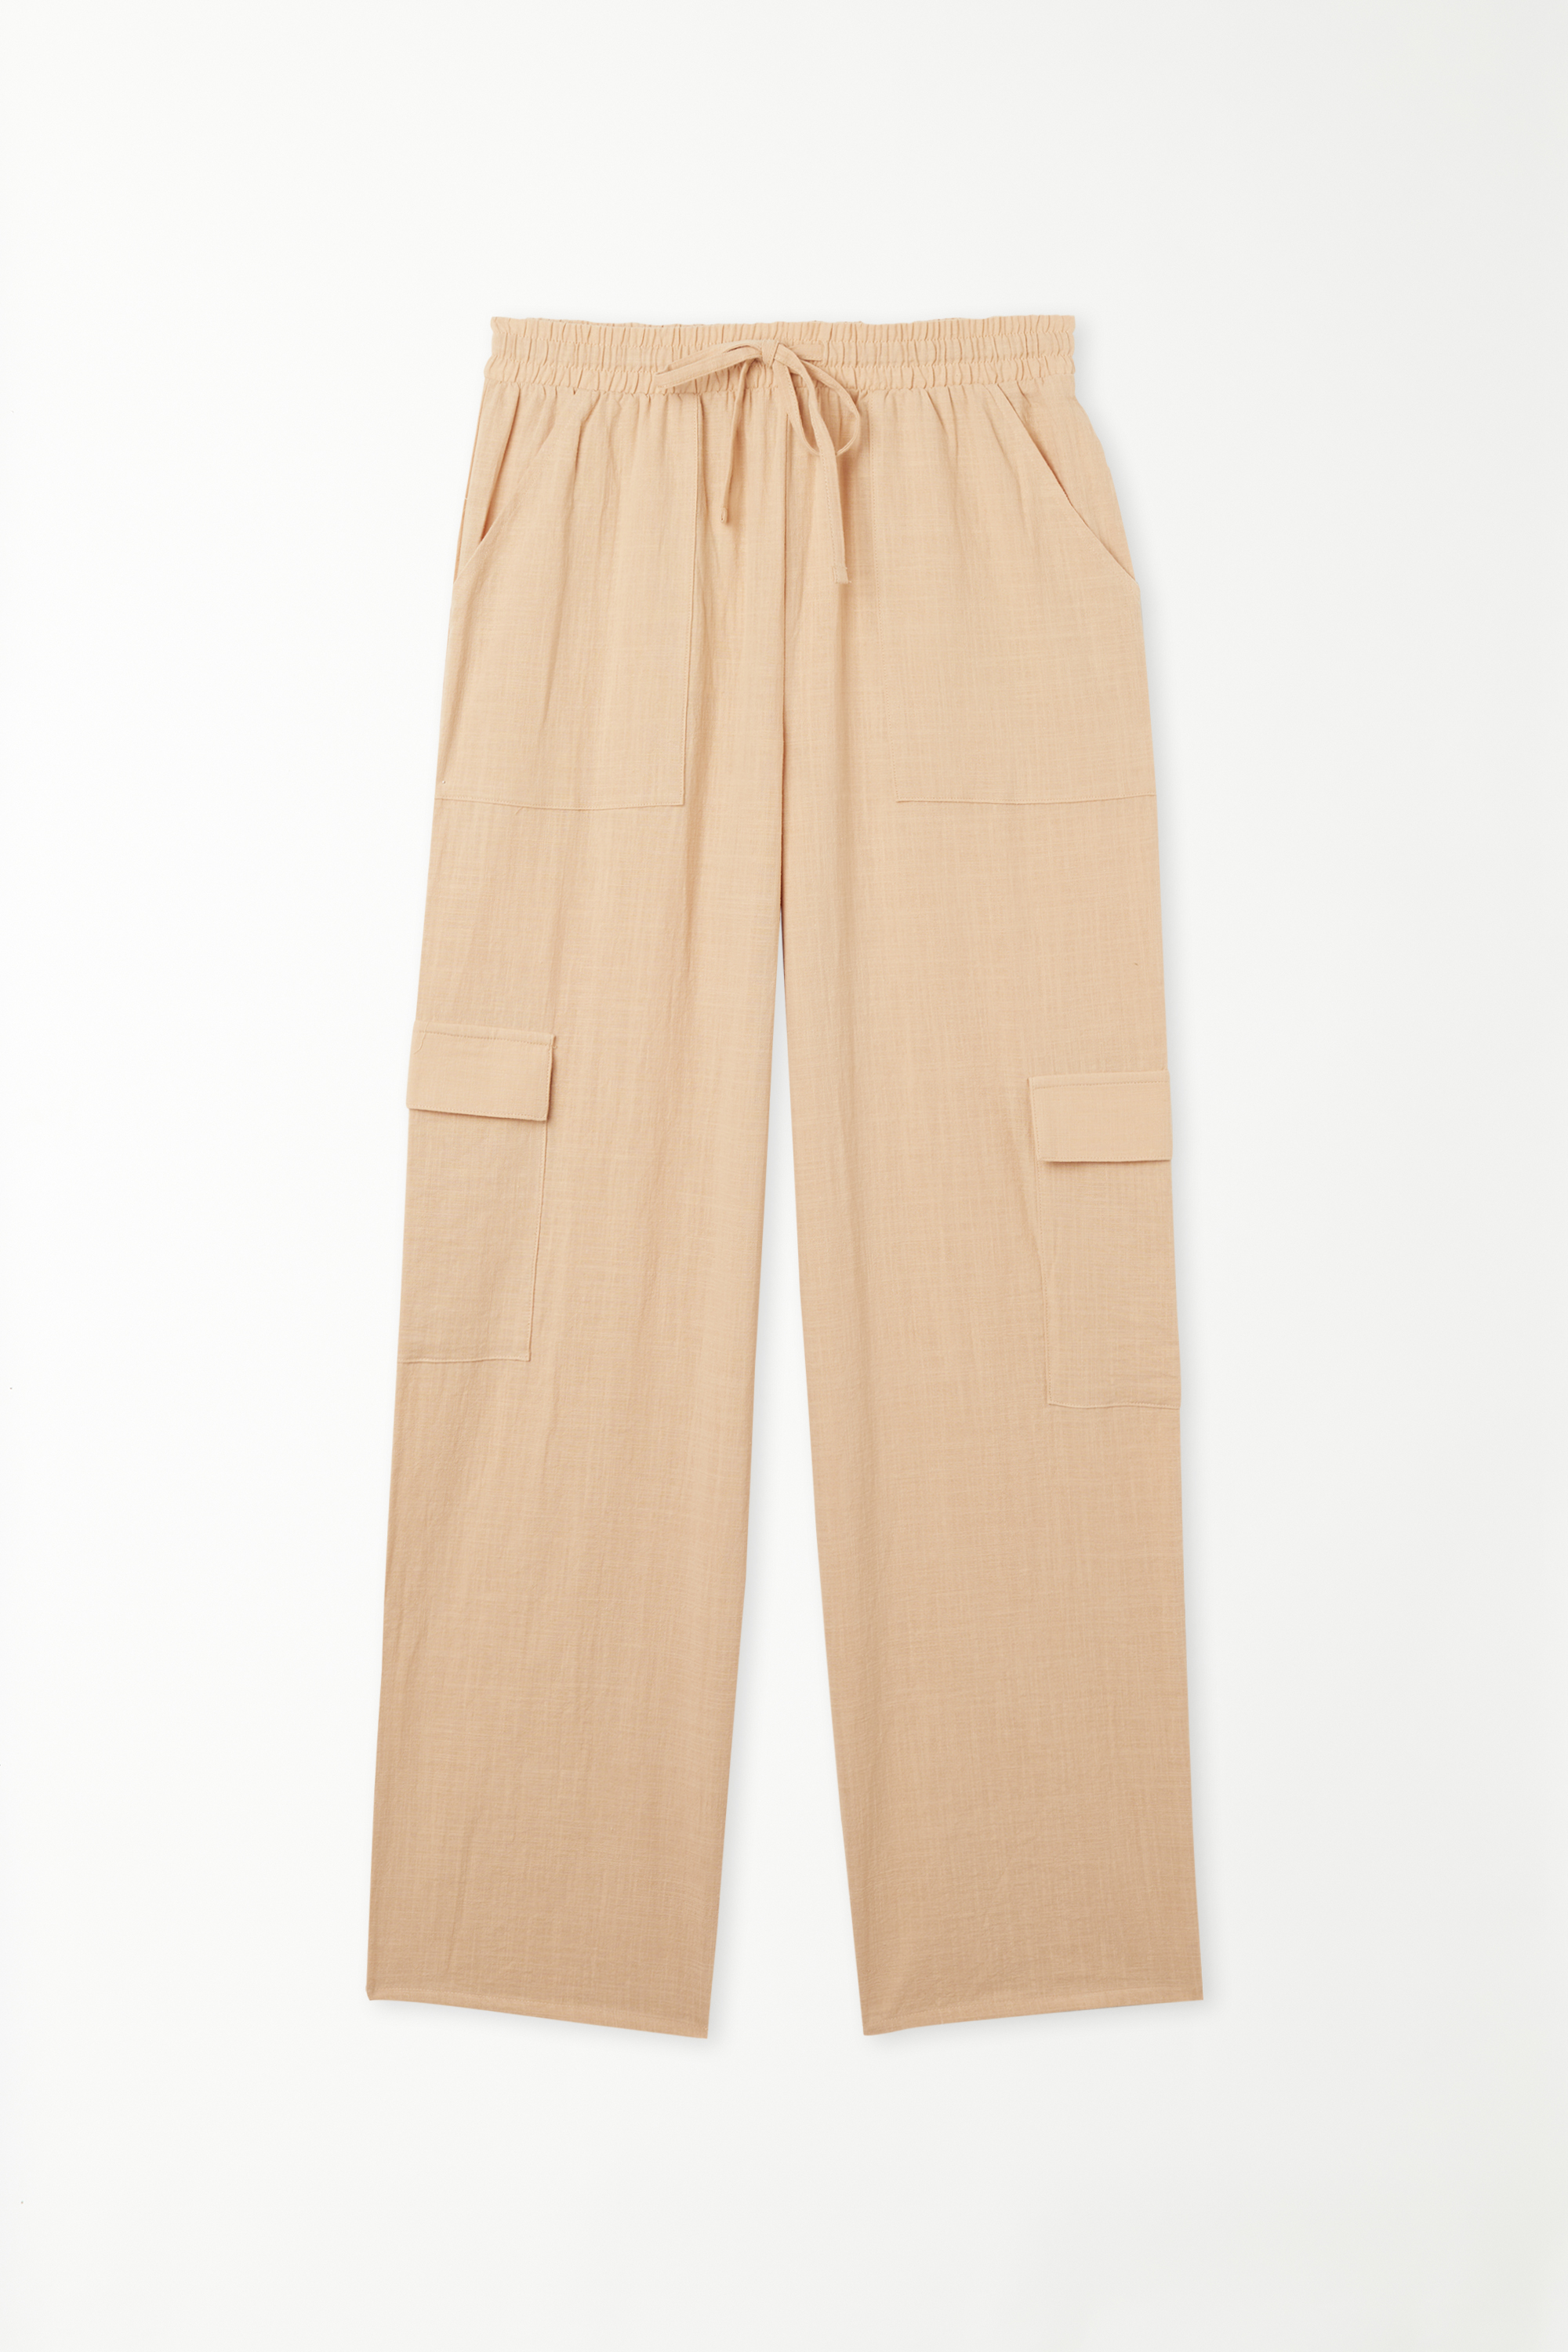 Pantalon 100 % Coton Ultra-léger avec Poches